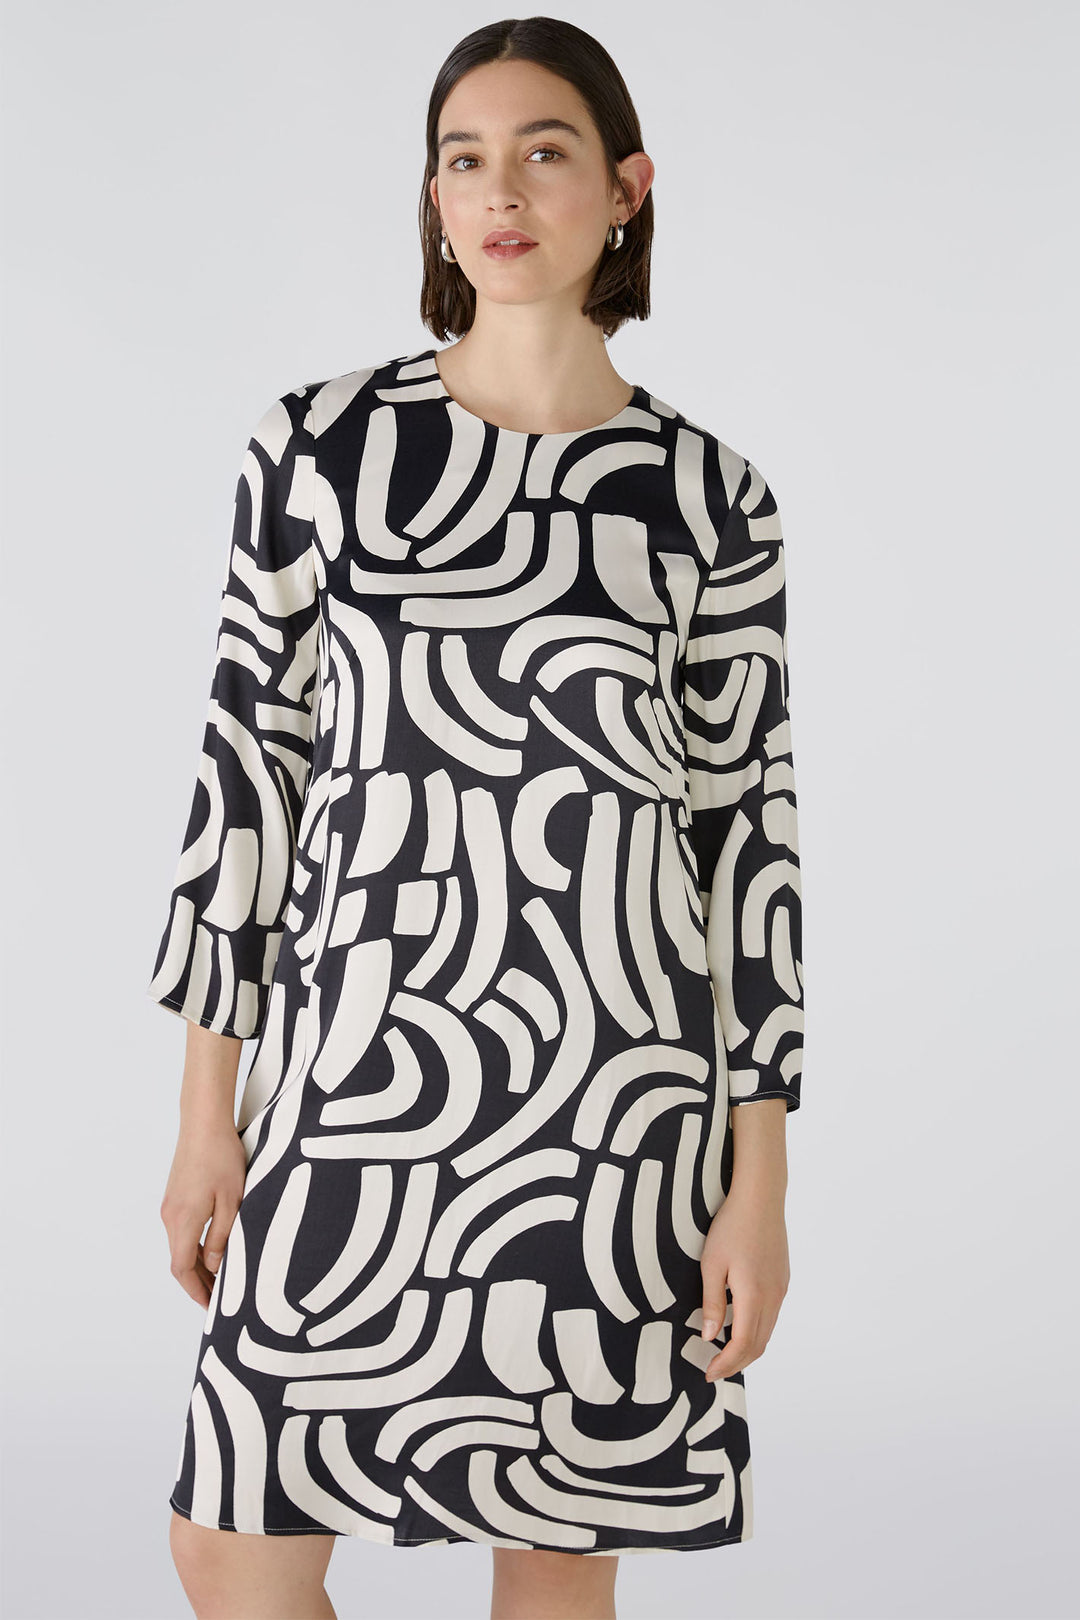 Oui 88272 Black Off White Abstarct Print Round Neck Dress - Olivia Grace Fashion